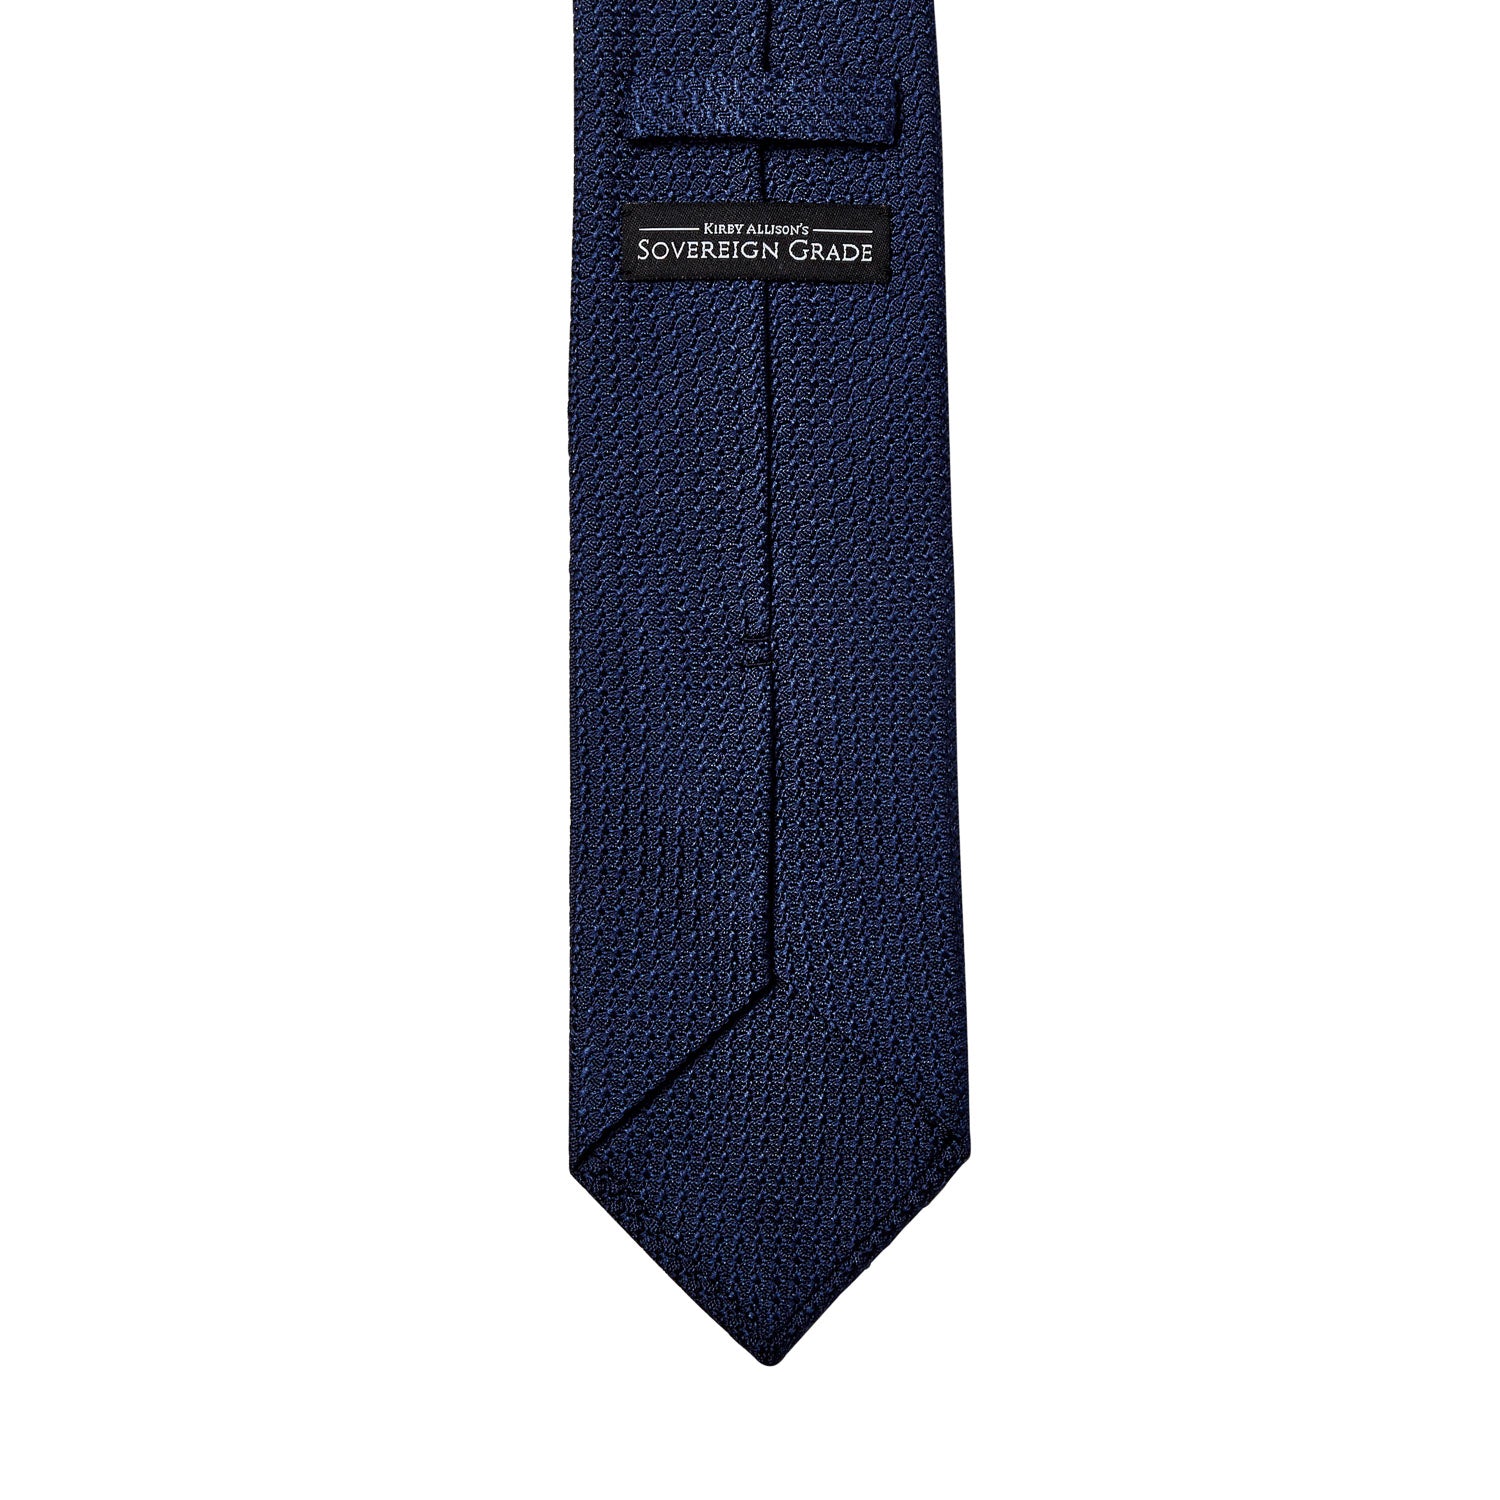 A quality Sovereign Grade Grenadine Grossa Navy Blue Tie by KirbyAllison.com on a white background.